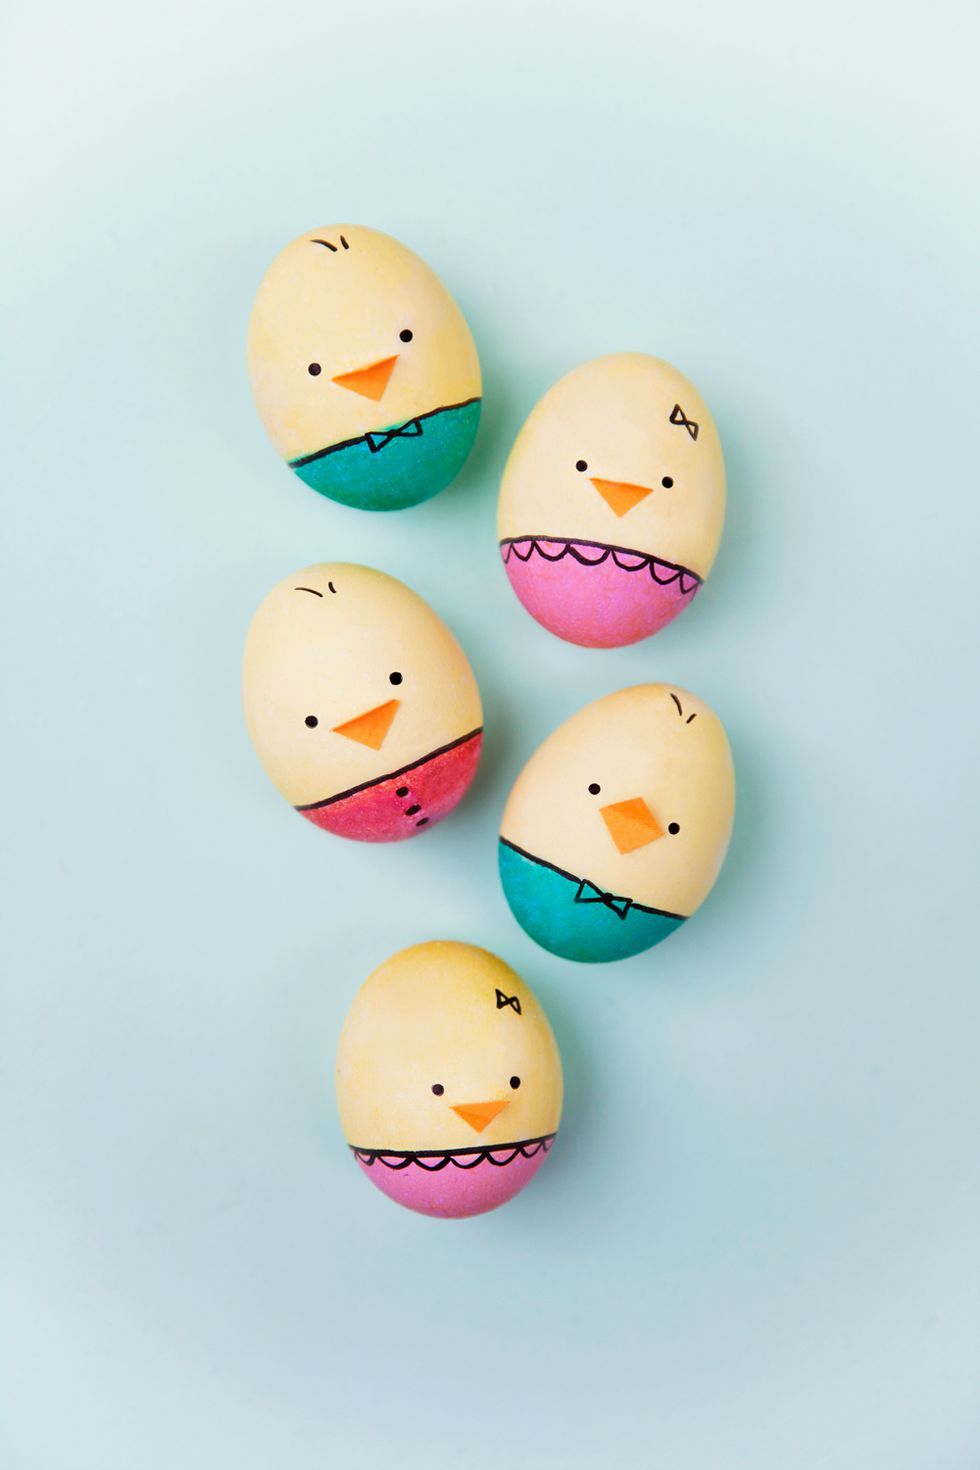 56 Best Easter Egg Decorating Ideas - Creative Easter Egg Design Ideas